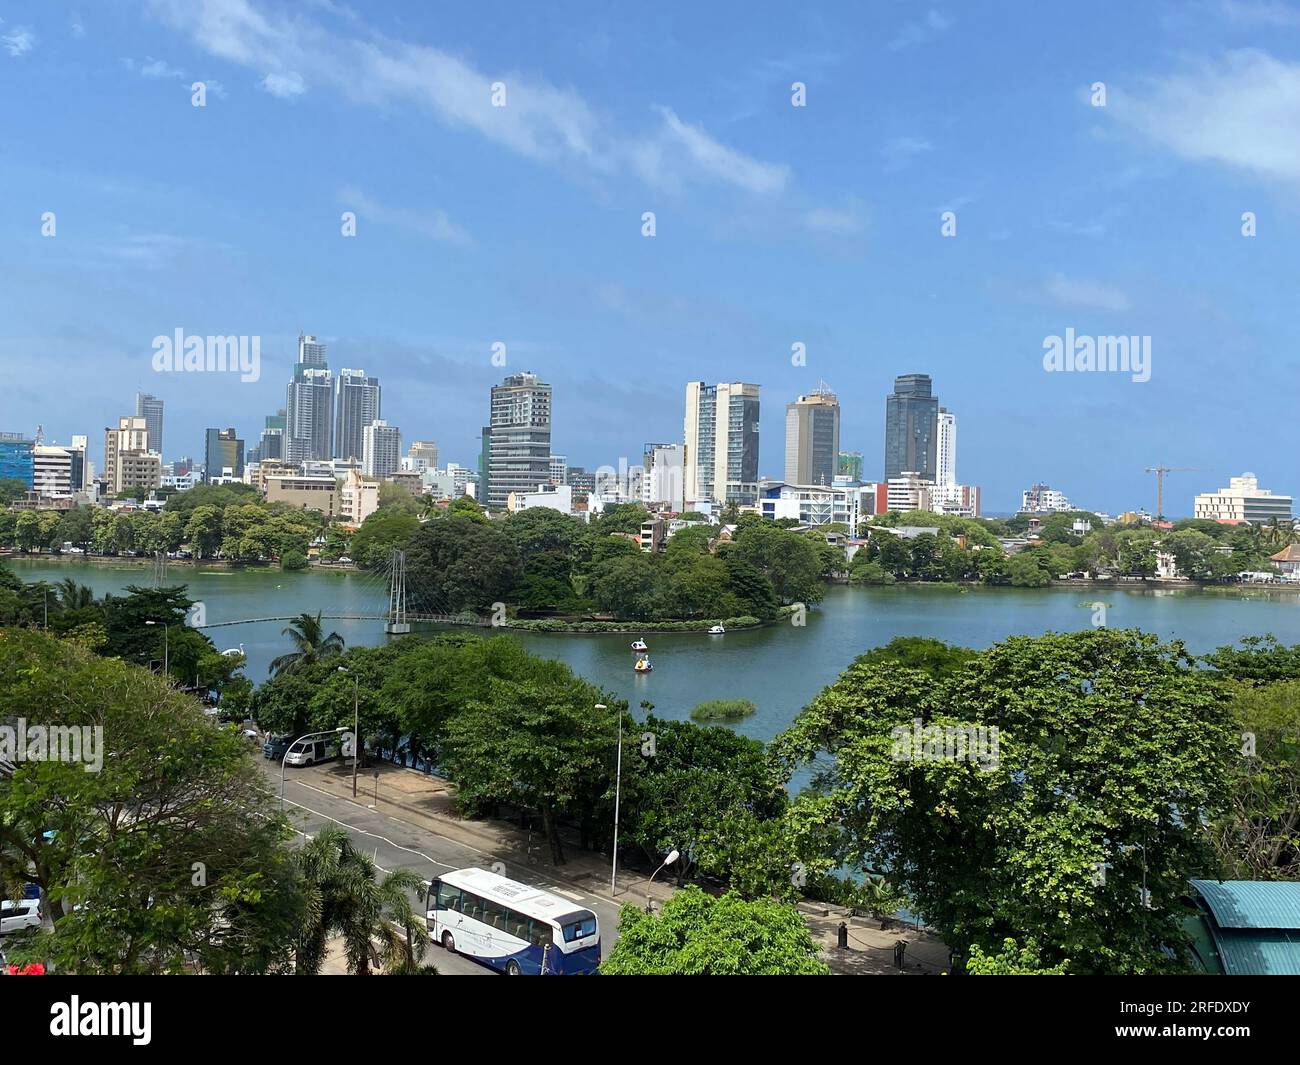 Wunderschöne Stadtrelaub-Fotos in Sri Lanka Stockfoto